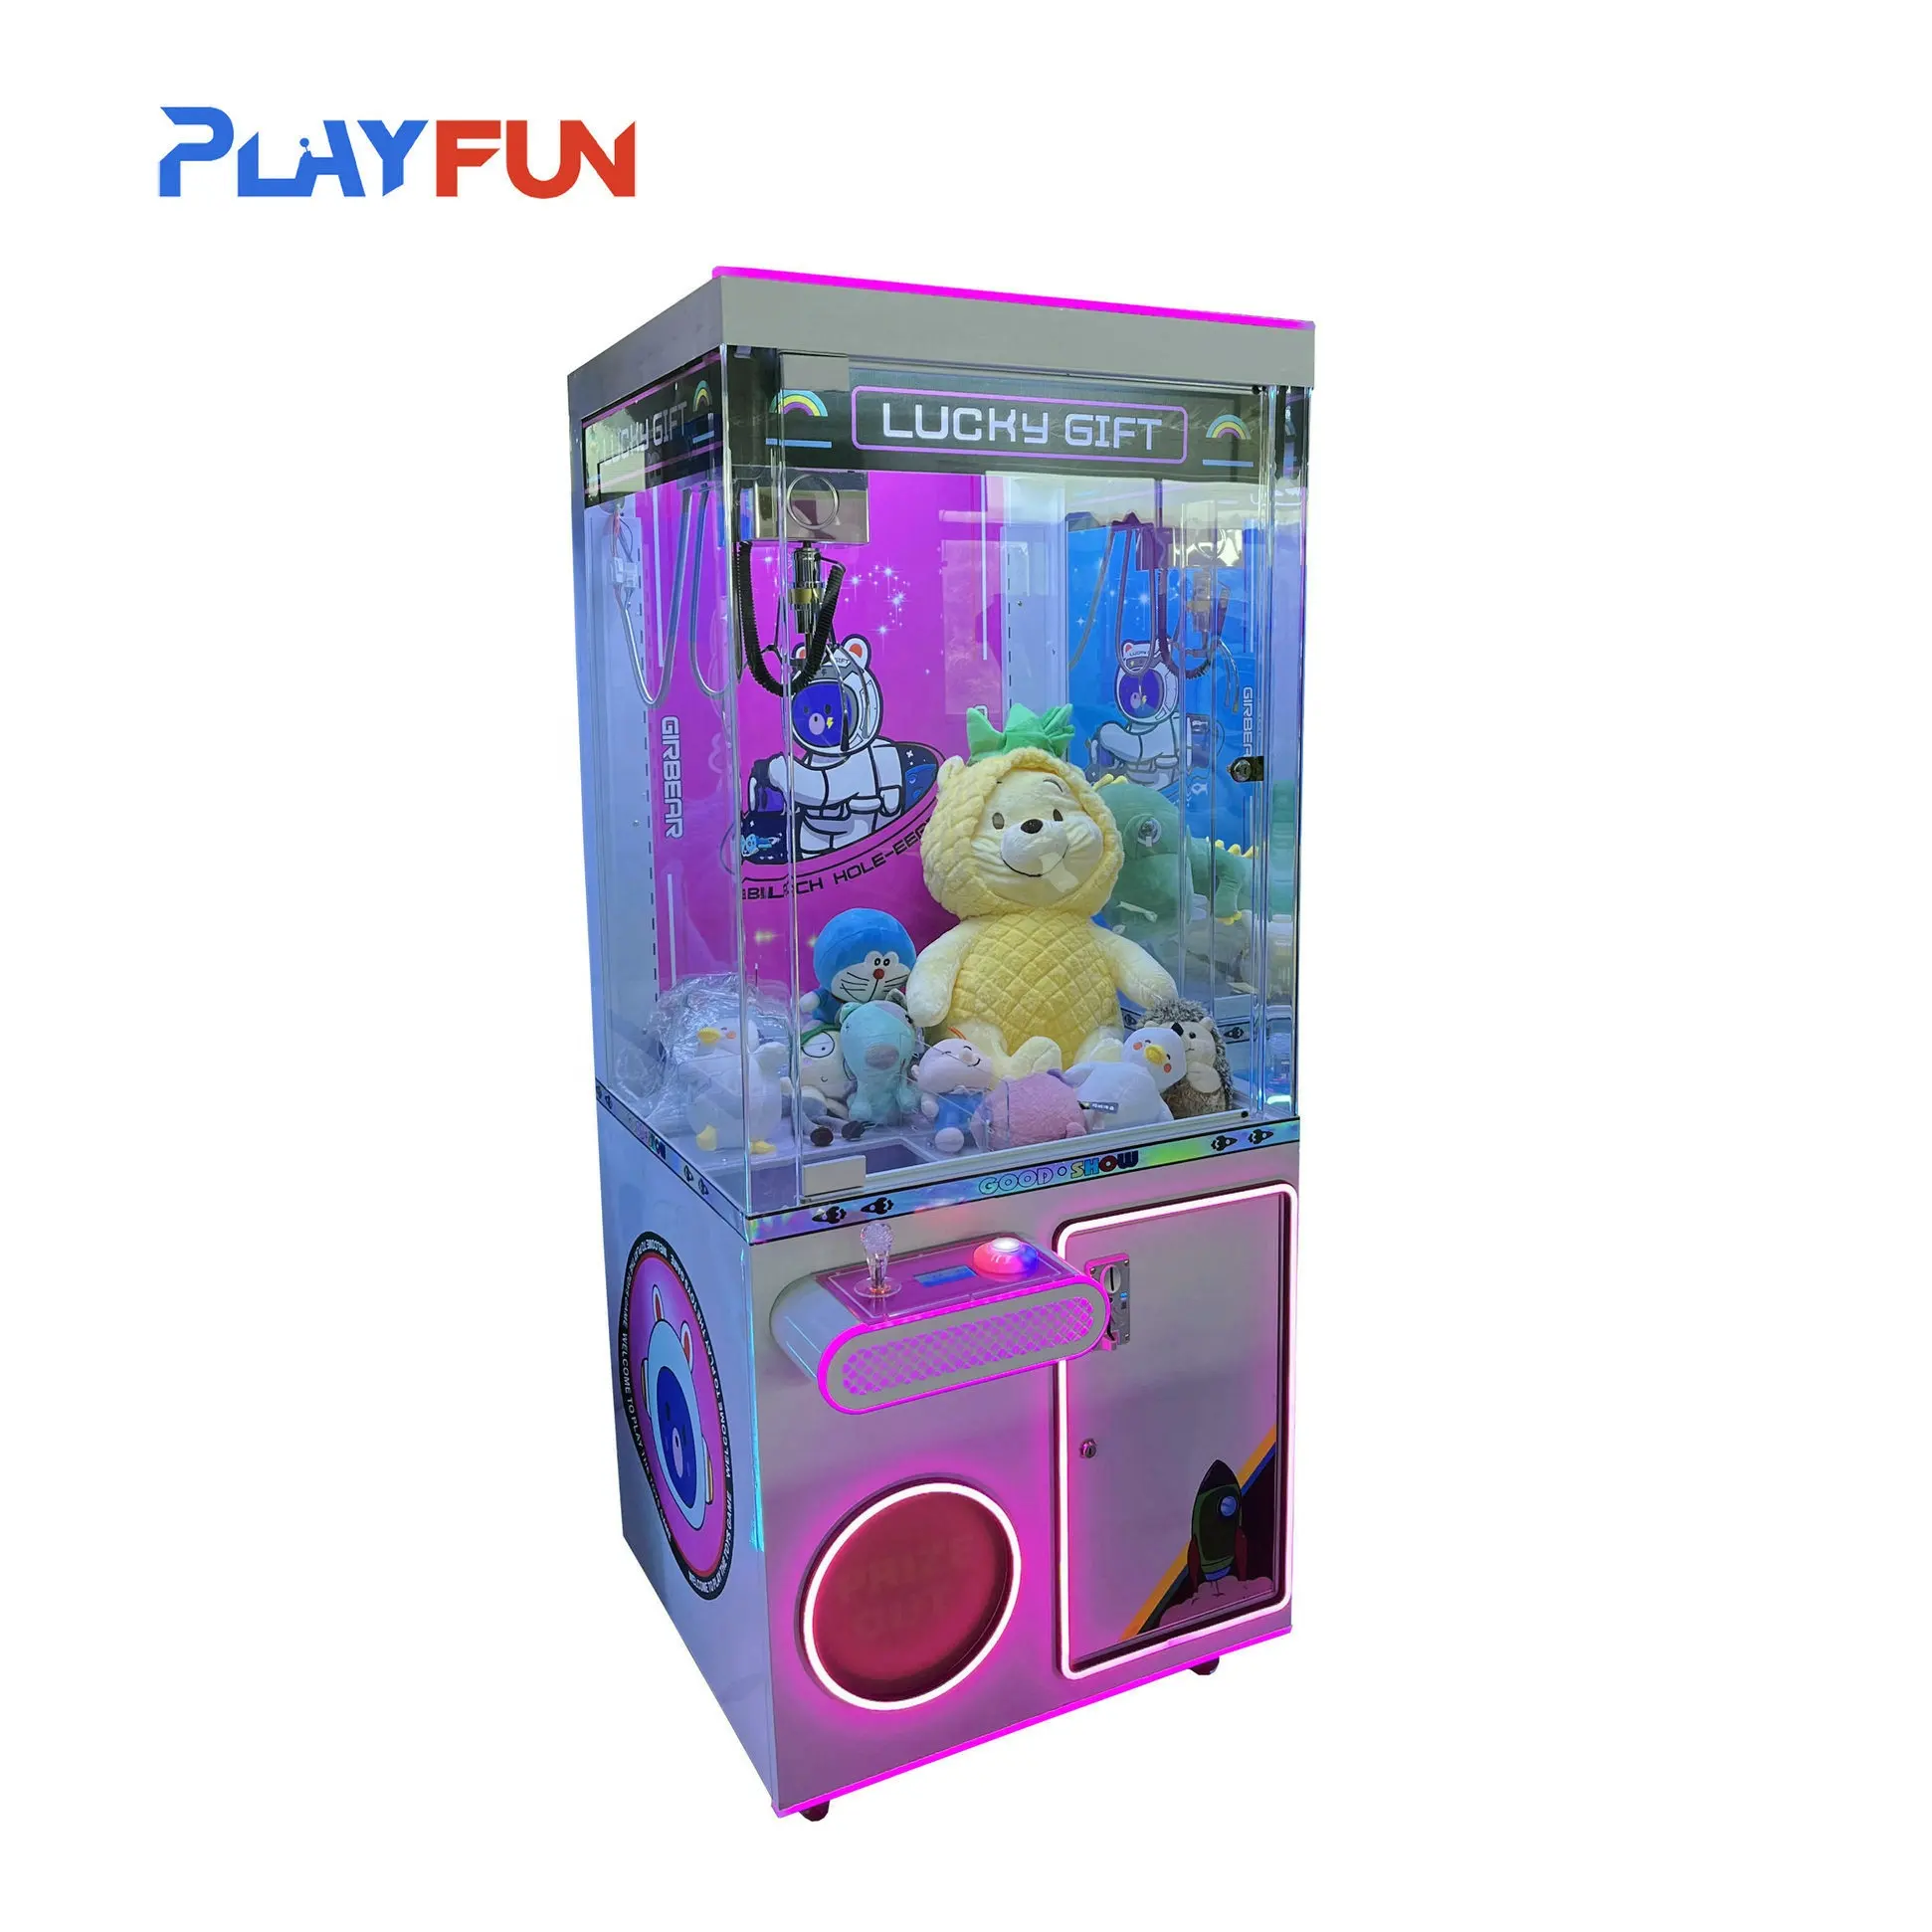 PlayFun vendite calde regalo fortunato a gettoni peluche bambola Arcade artiglio gru macchina in vendita